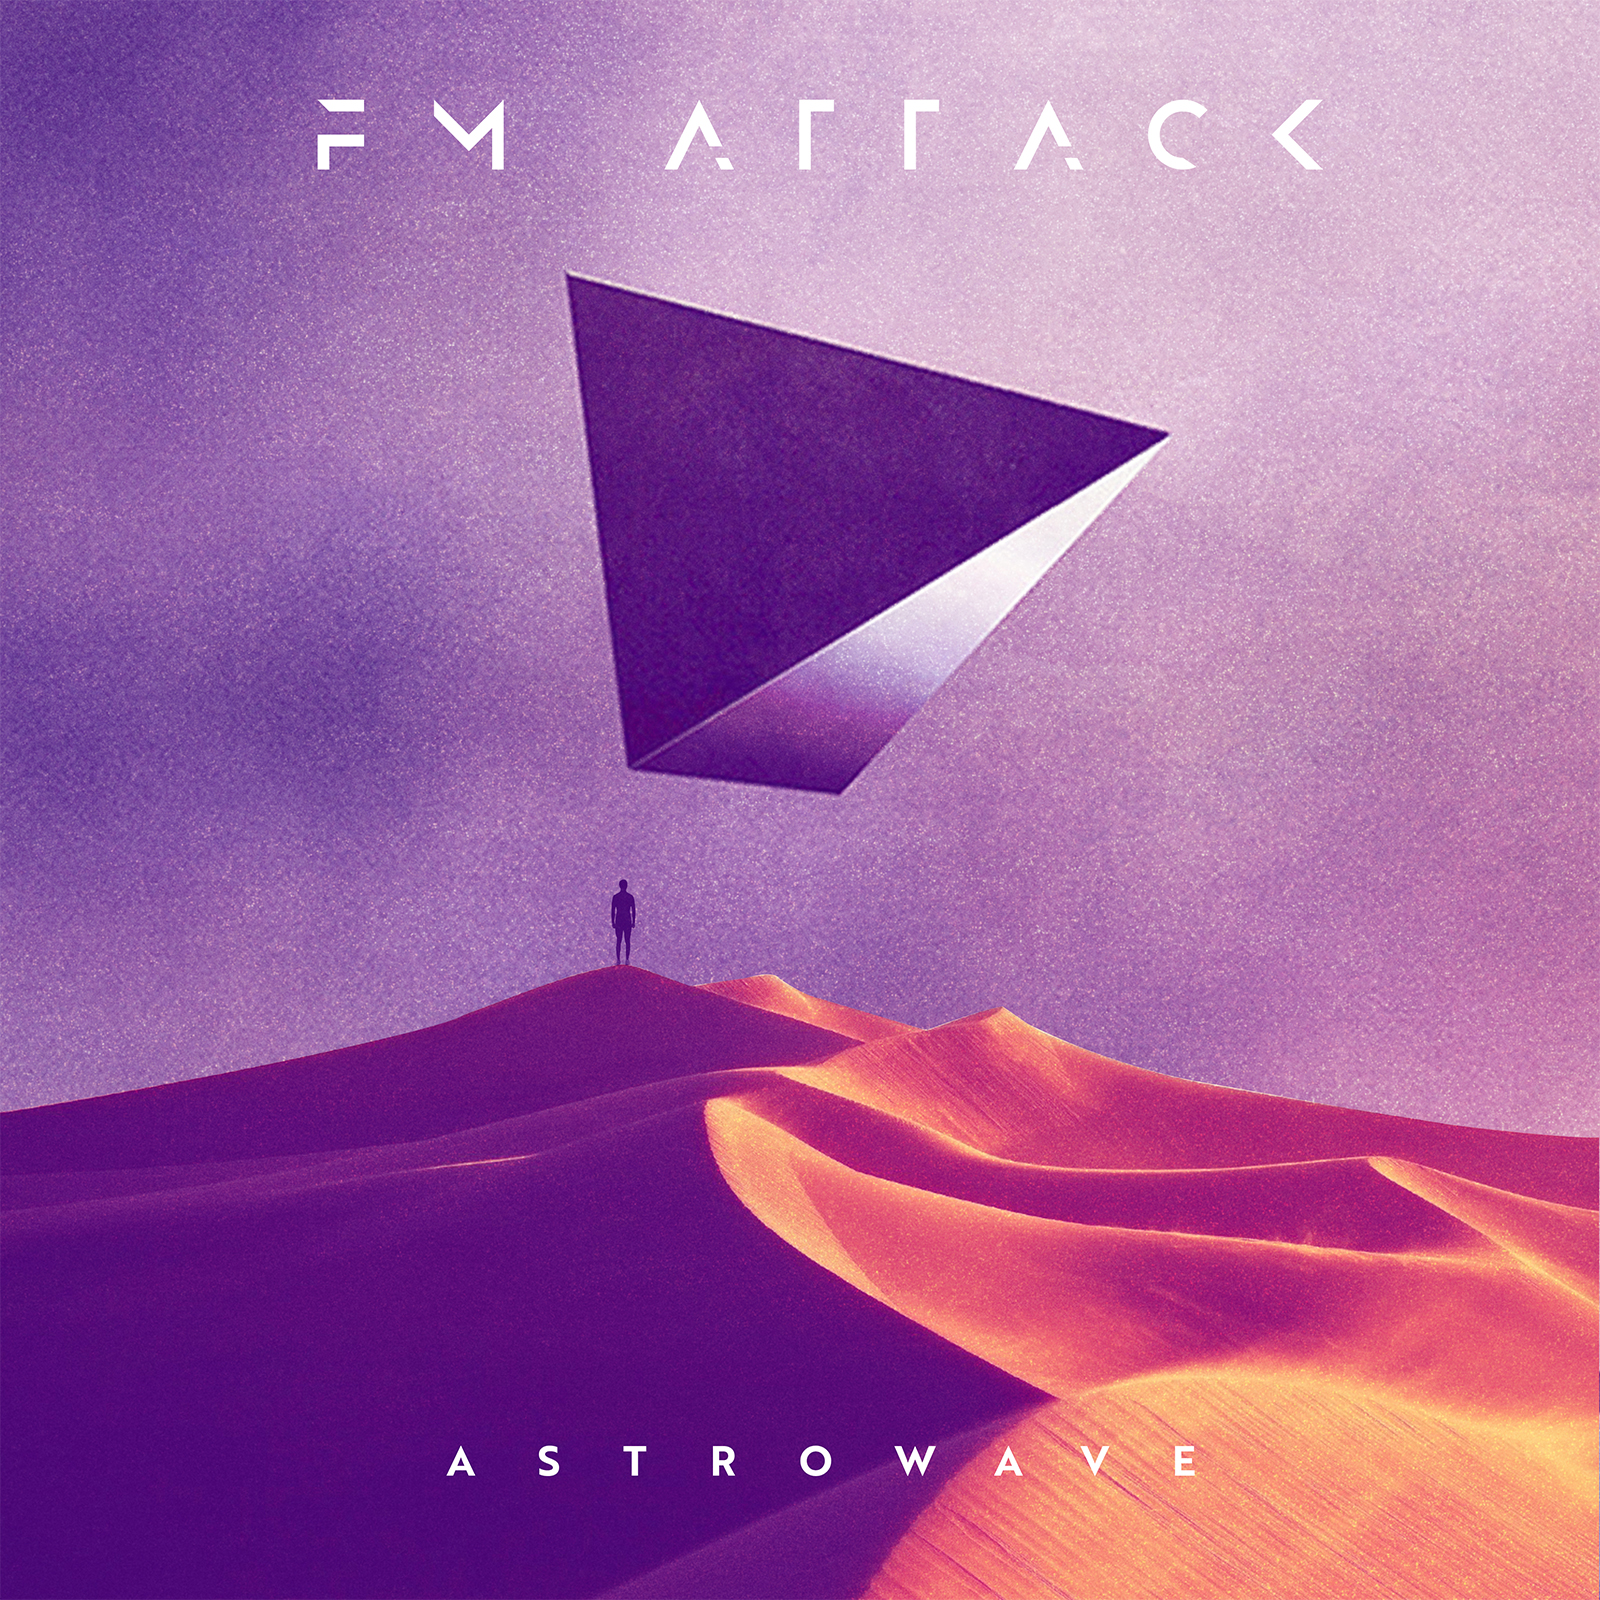 A million miles away. Astrowave. Дискография fm Attack. Fm Attack New World. Synthwave fm Attack.